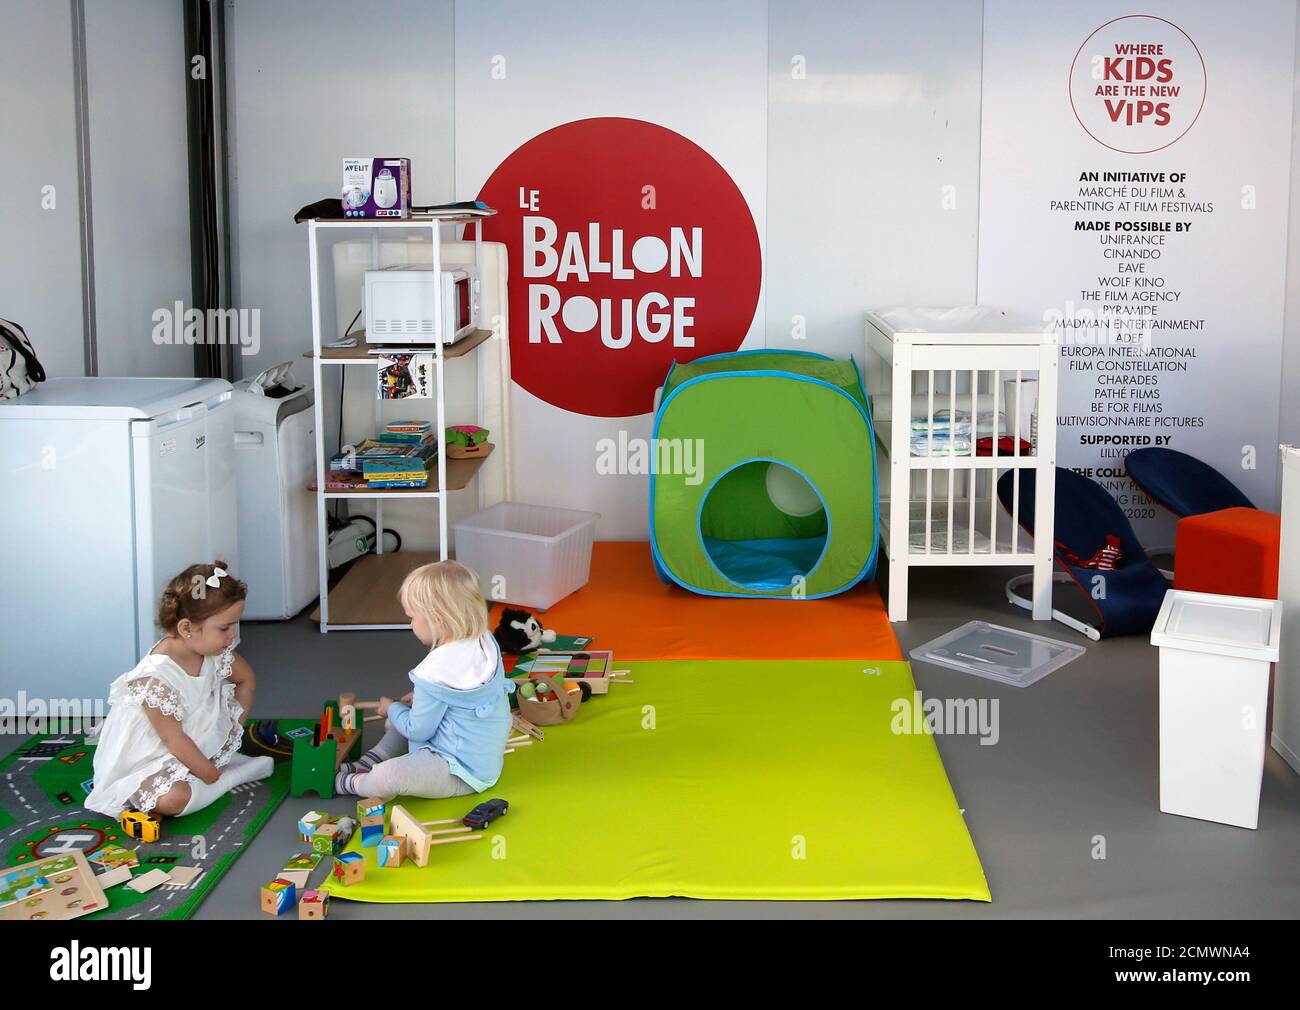 72nd Cannes Film Festival - Le Ballon Rouge initiative - Cannes, France,  May 15, 2019. Children are seen at Le Ballon Rouge Kids Pavilion located at  the Village International Pantiero. REUTERS/Regis Duvignau